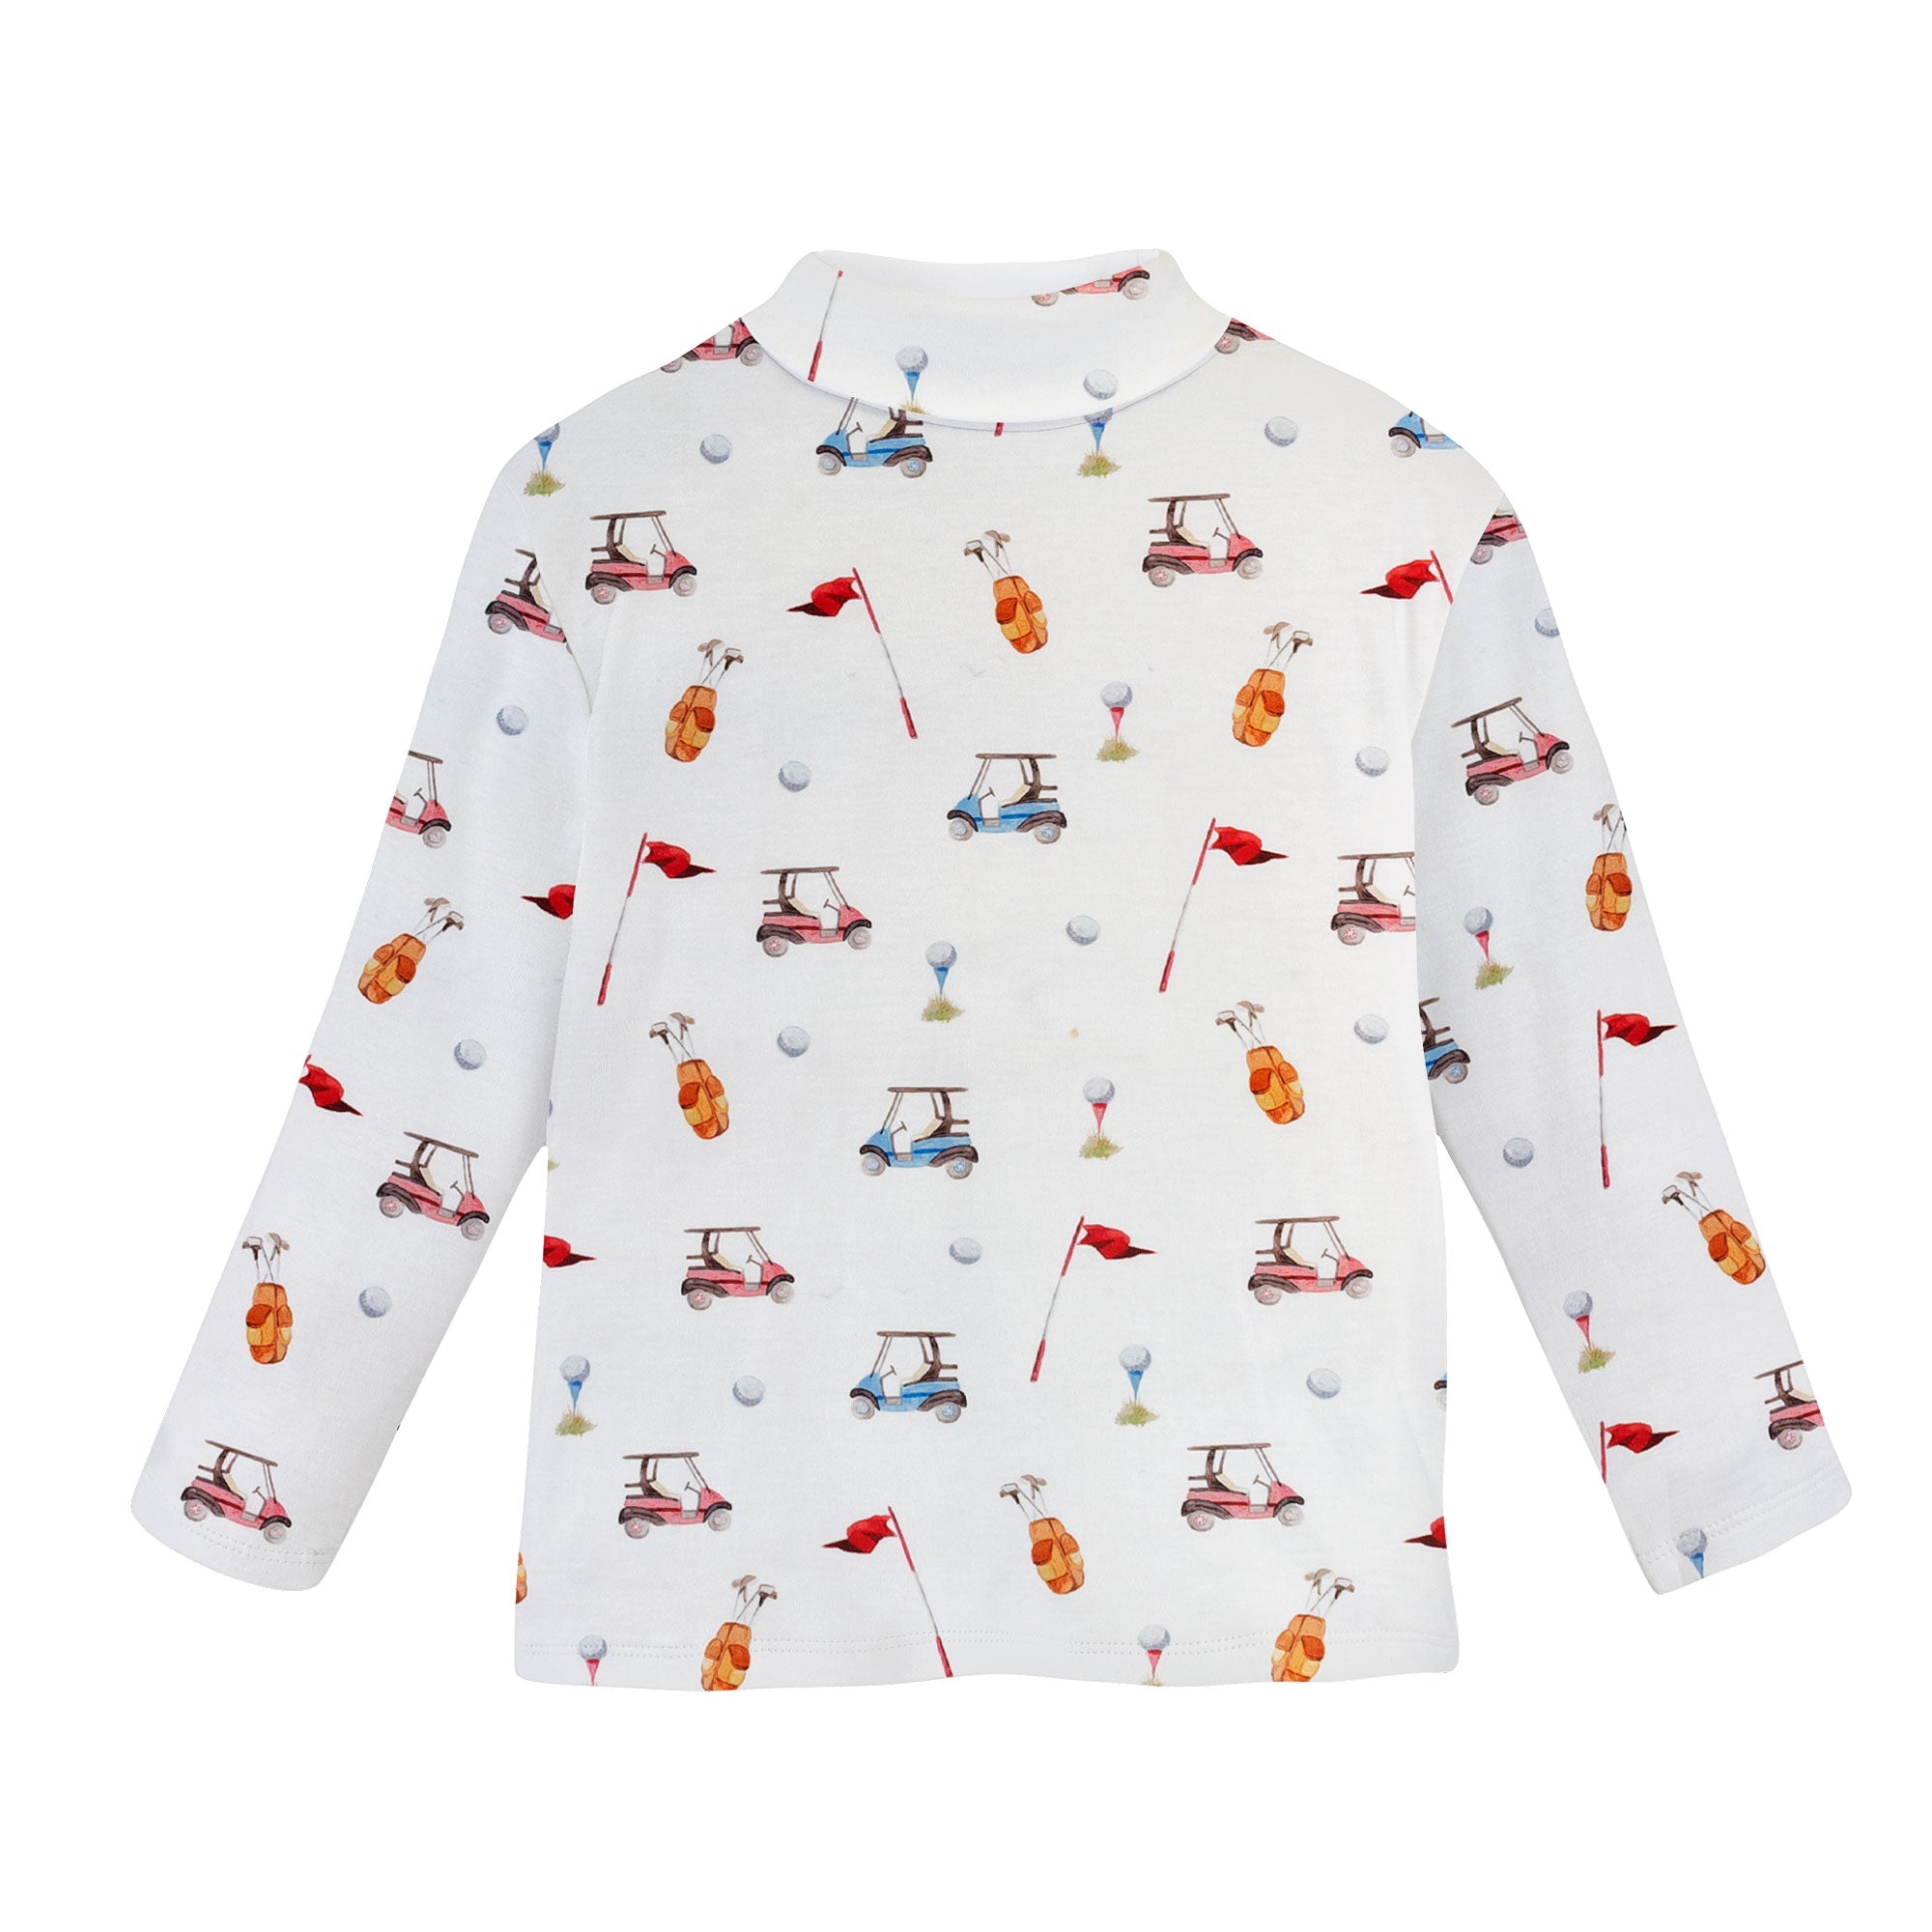 Toddler Boy's Golfing Print Turtleneck Shirt by Baby Club Chic